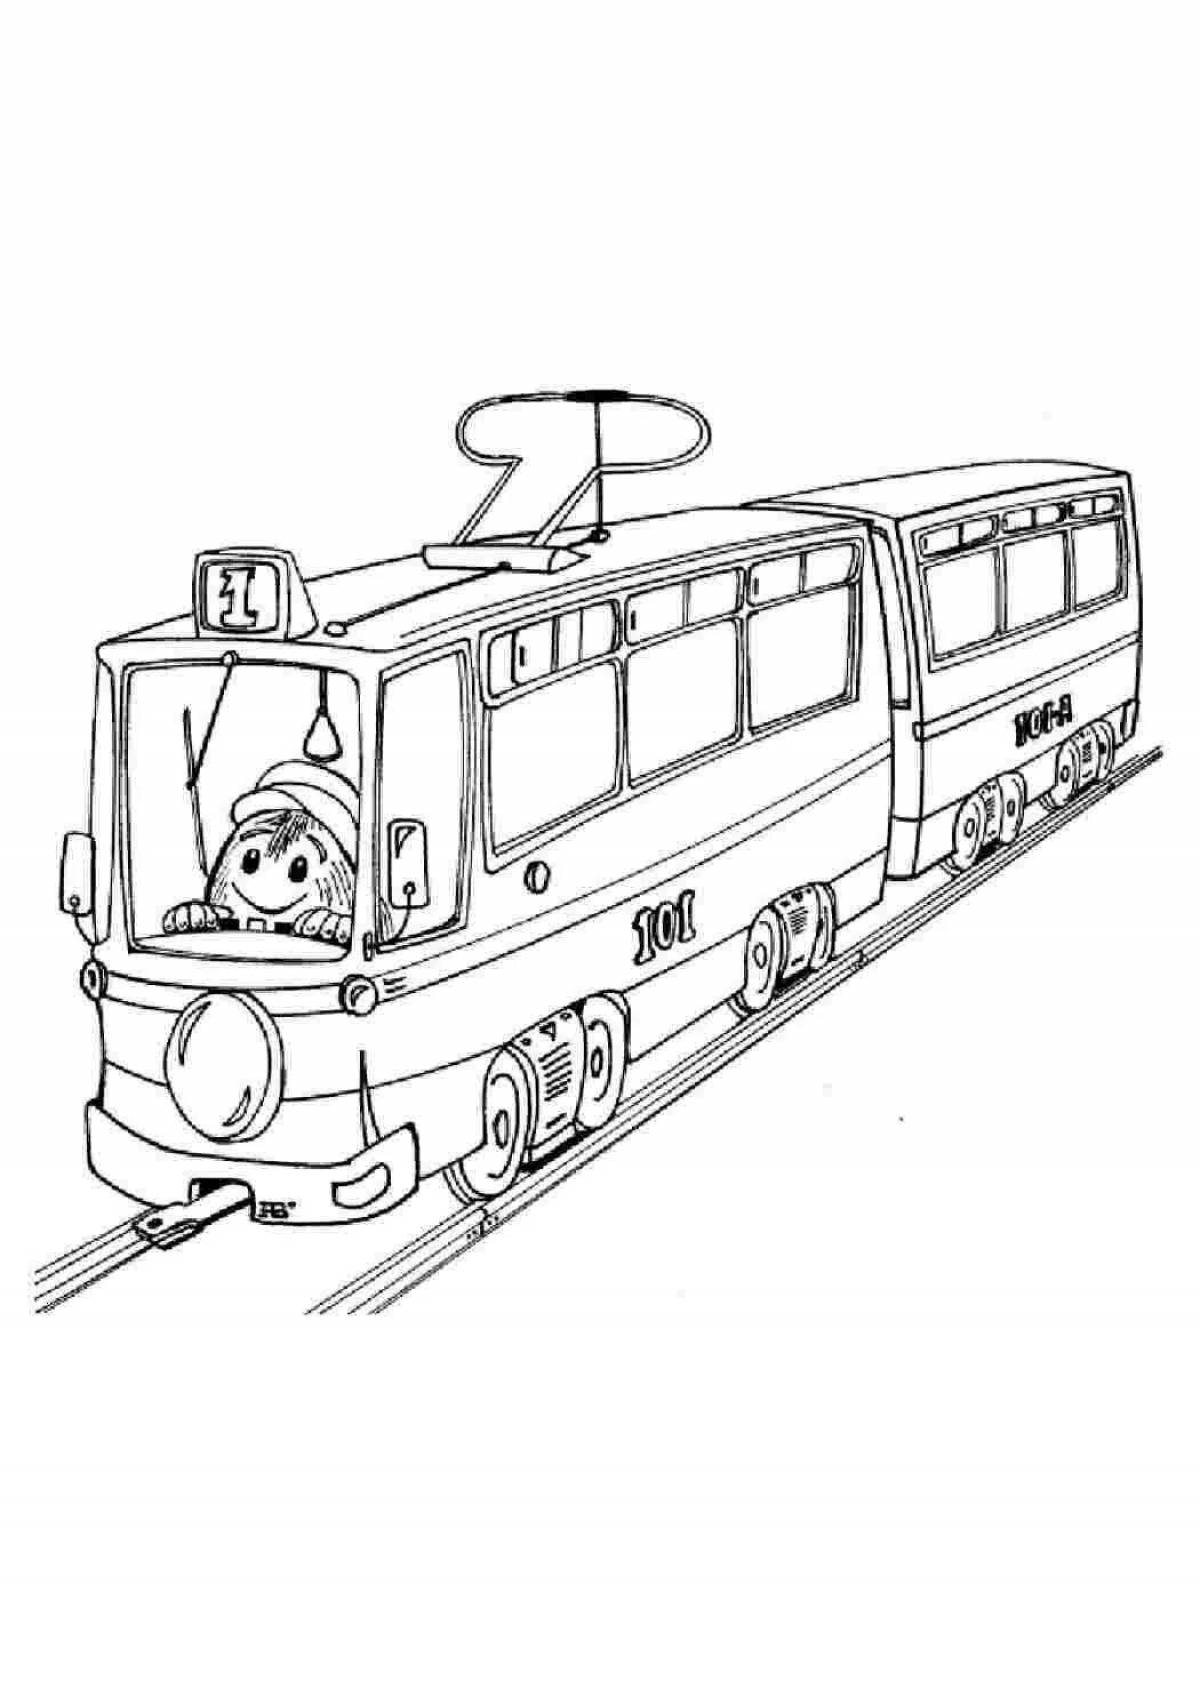 Adorable tram coloring book for preschoolers